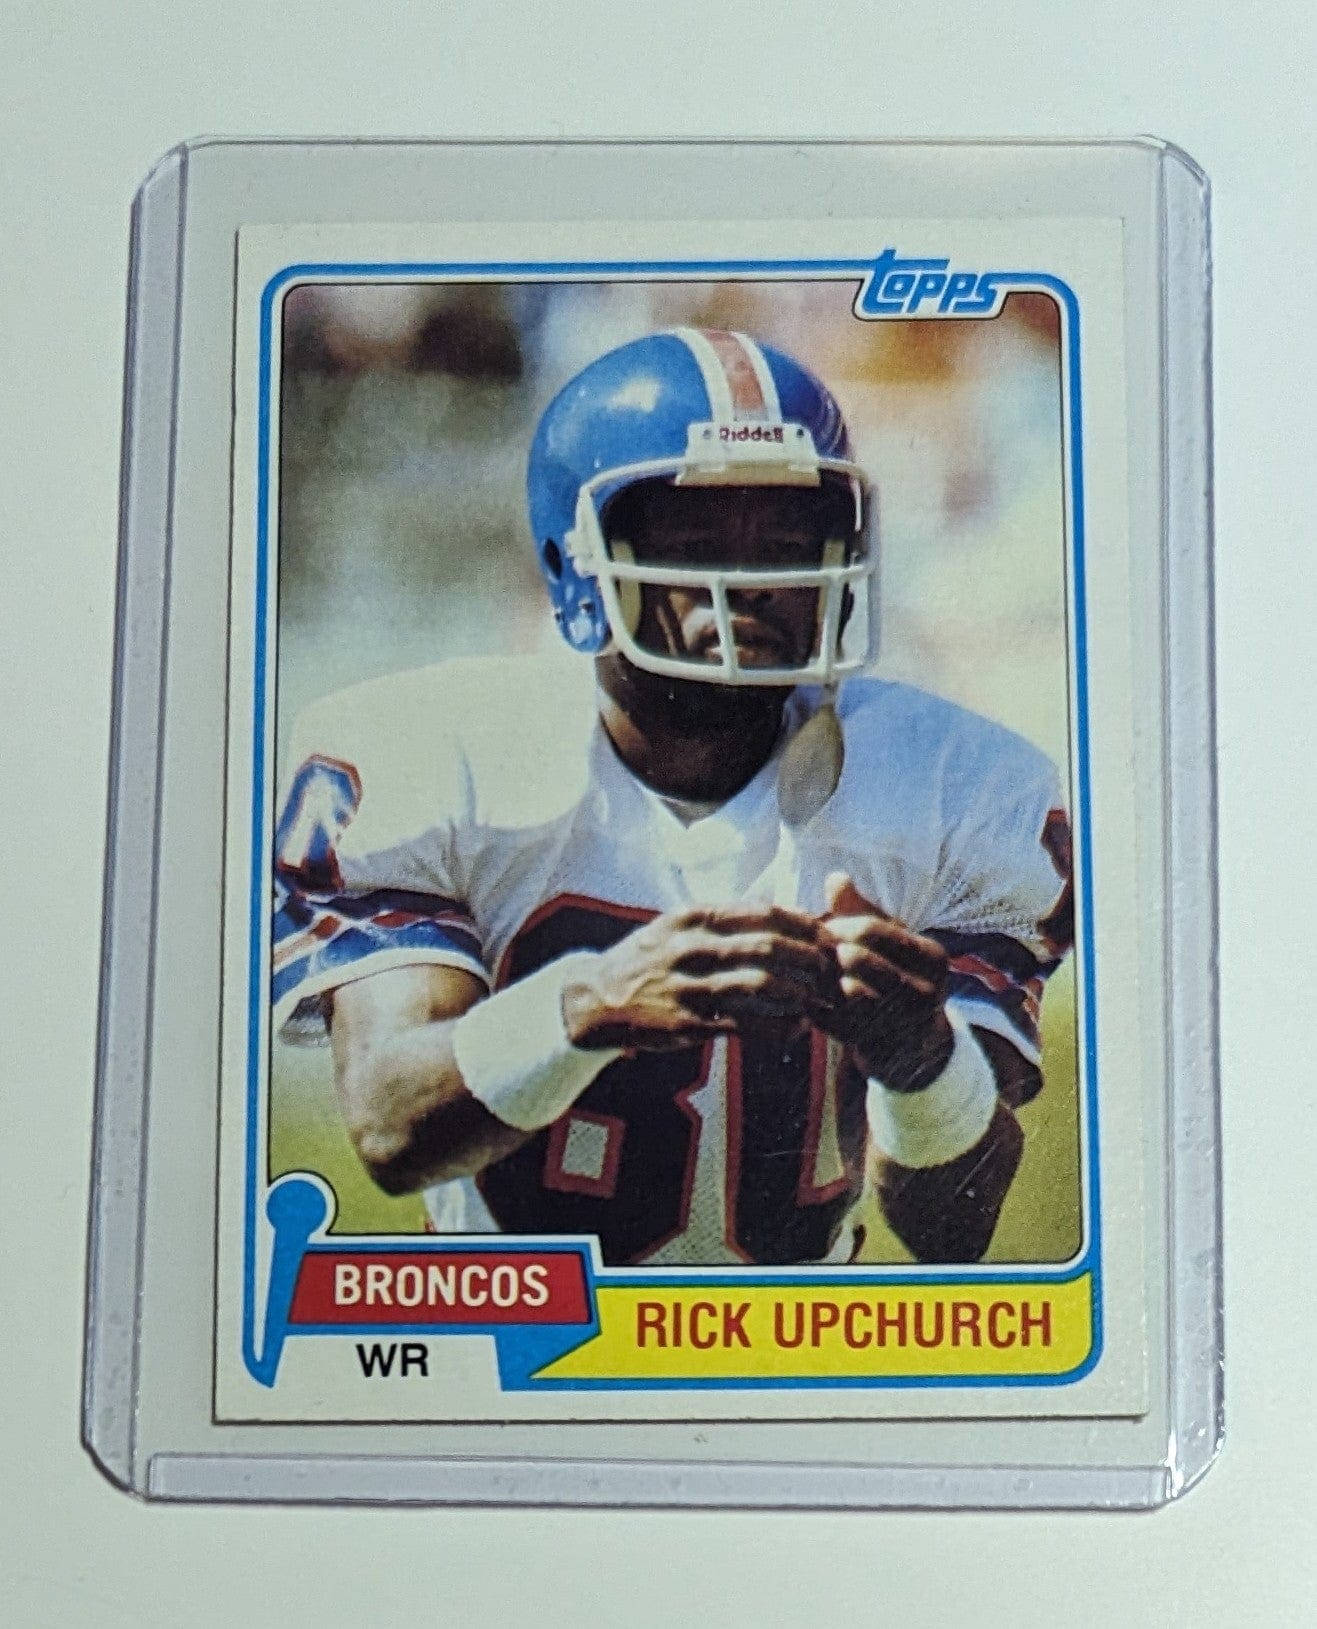 FIINR Football Card 1981 Topps Rick Upchurch Football Card #82 - Mint Condition